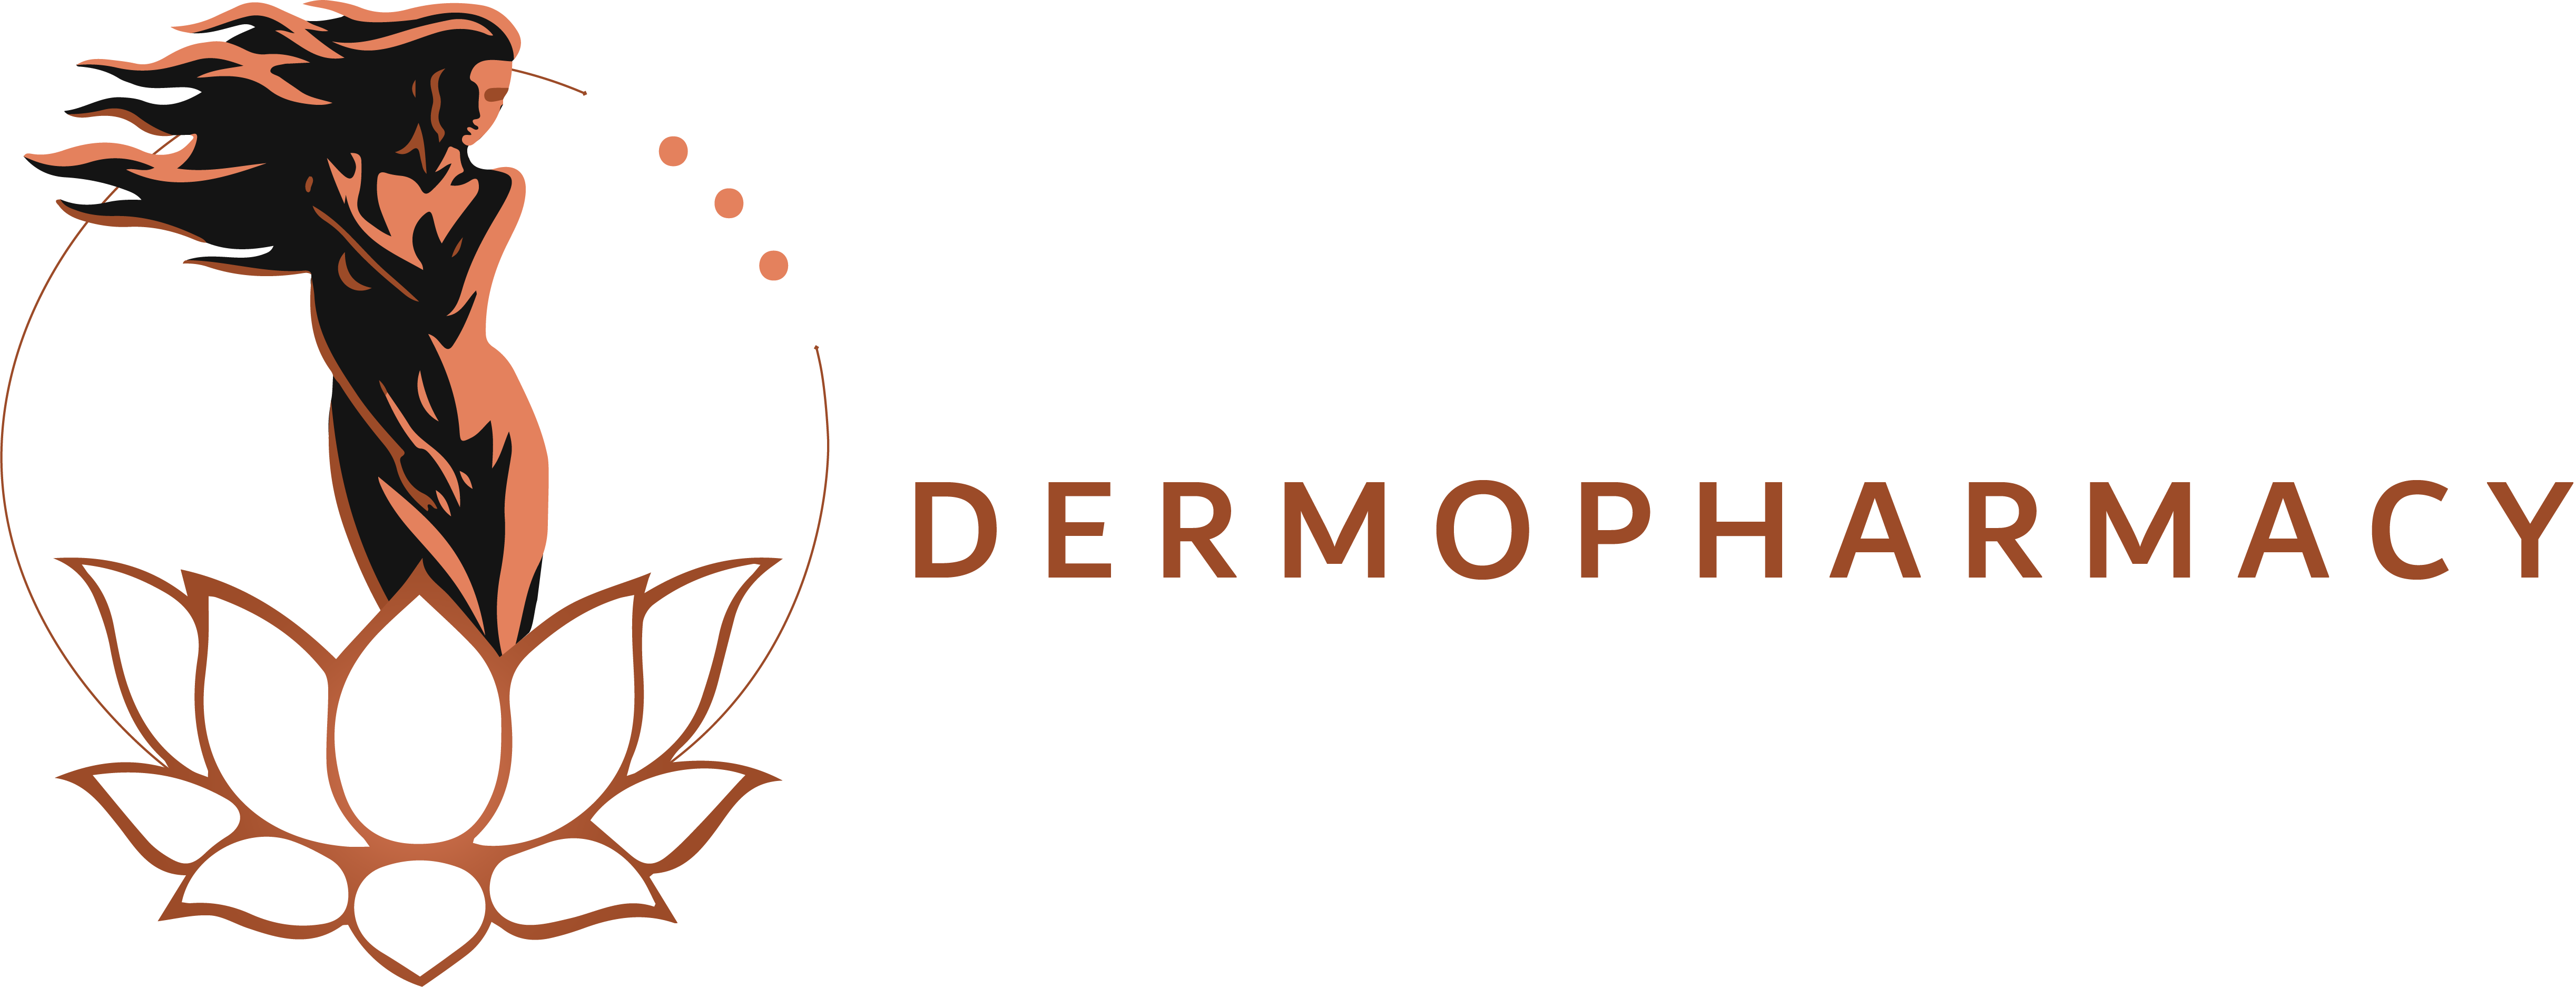 Dermopharmacy